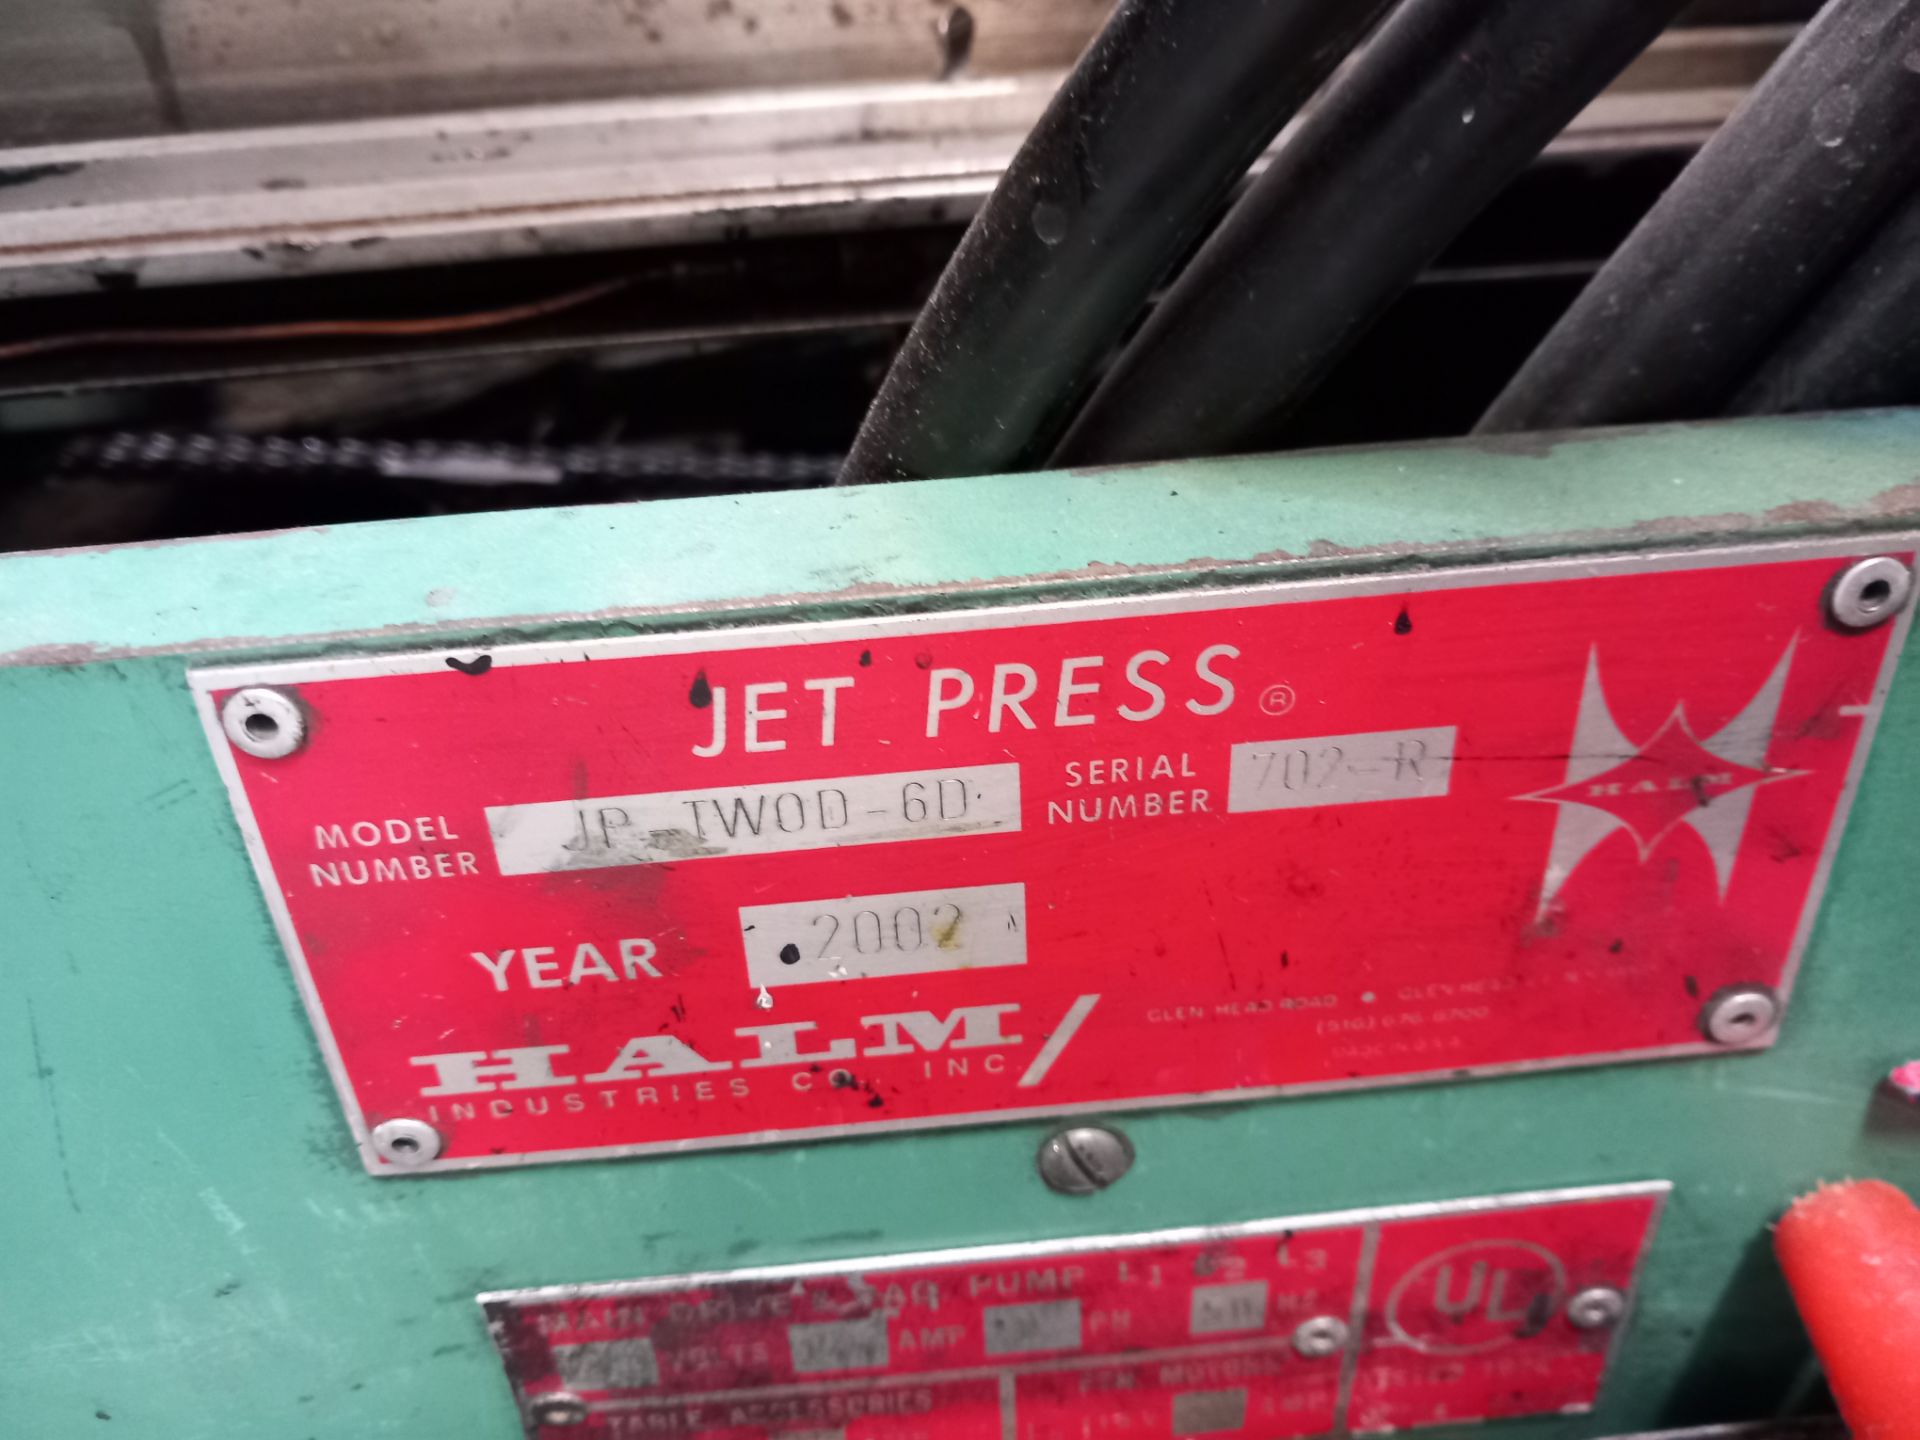 Halm Jet Press JPTWOD6D Envelope Printer, serial number 702-R (2002) with Baldwin 851-050-025, - Image 5 of 8